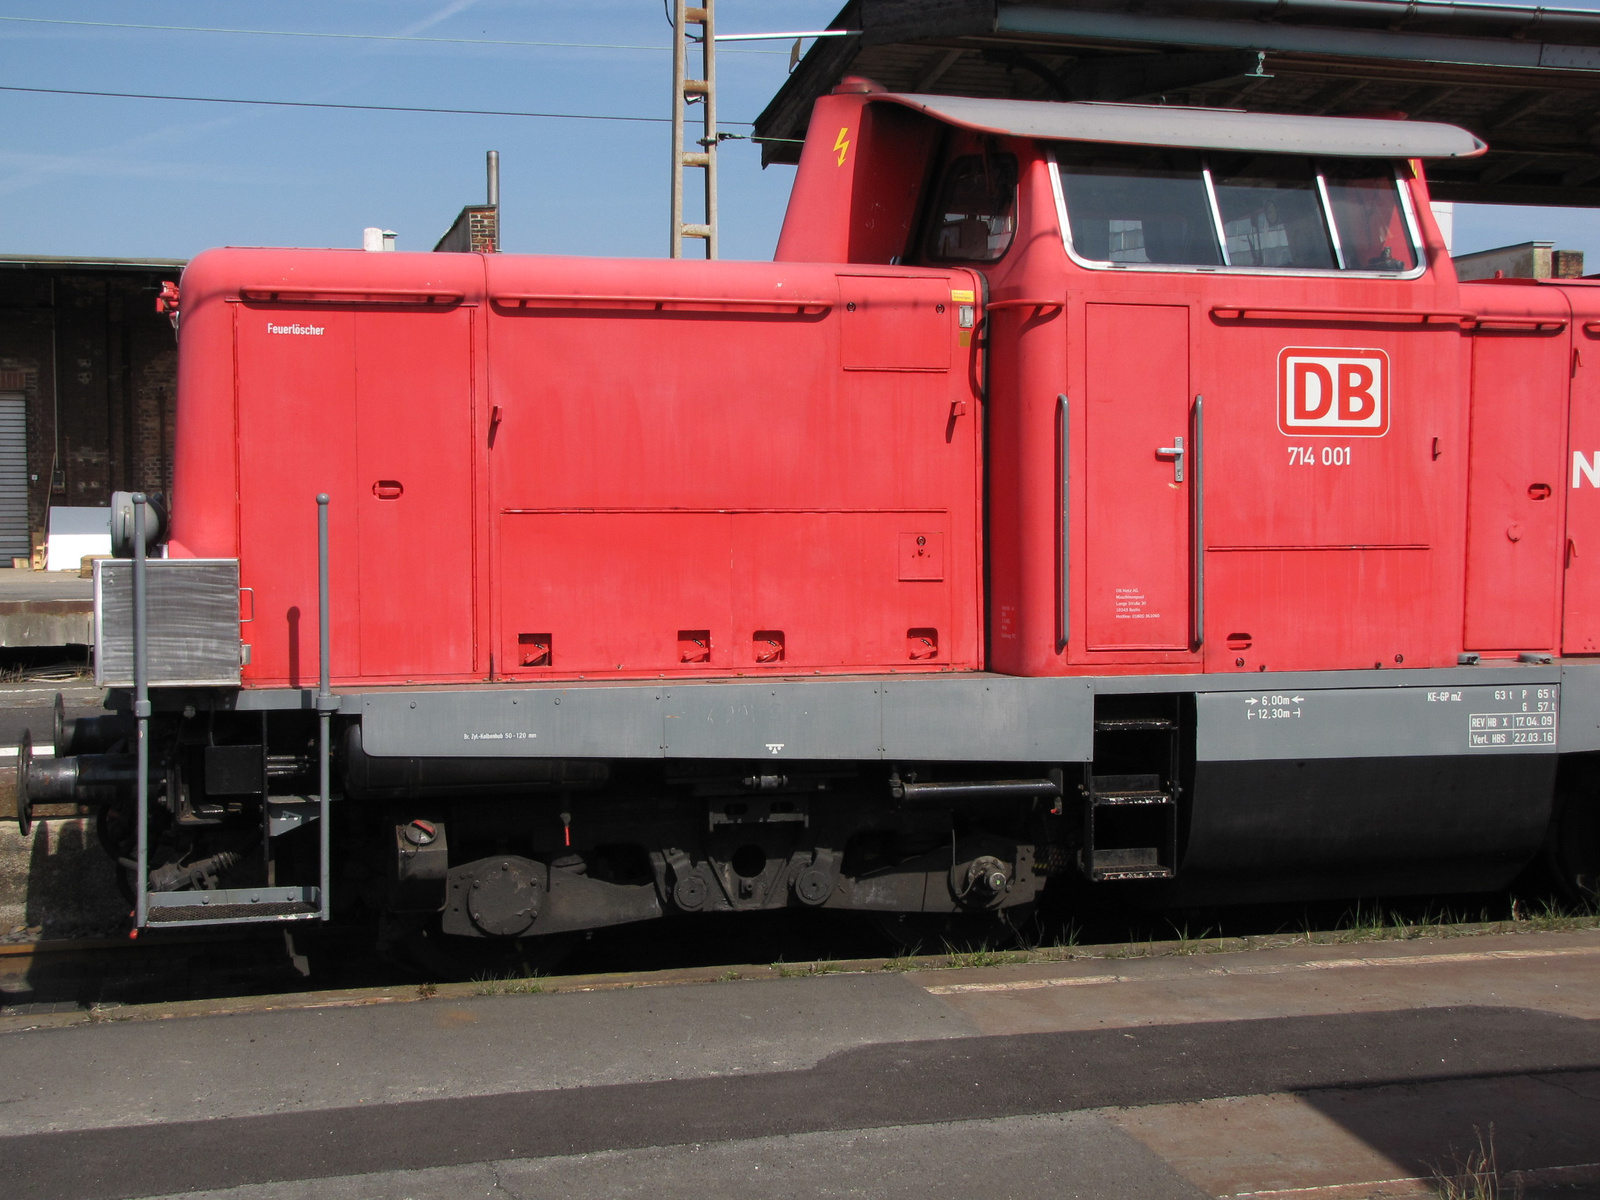 D-DB 8280 1 212 033-5 (714 001), SzG3